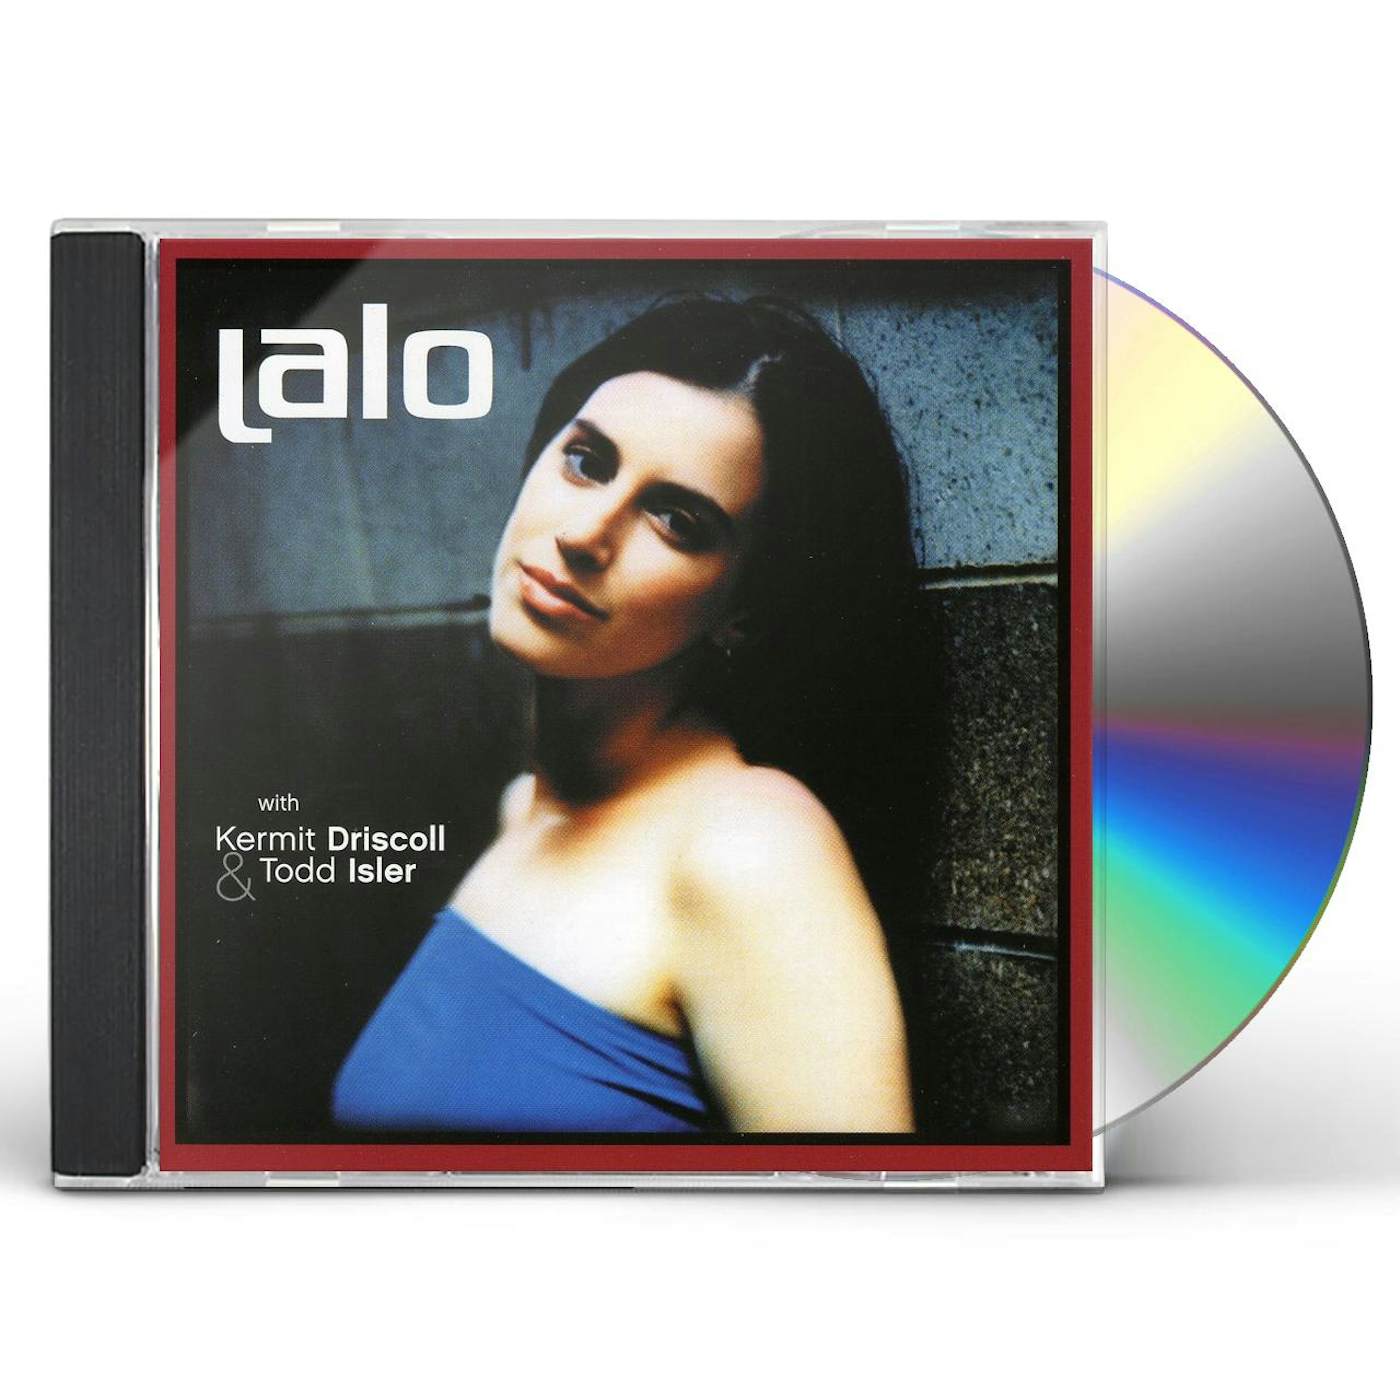 LALO CD